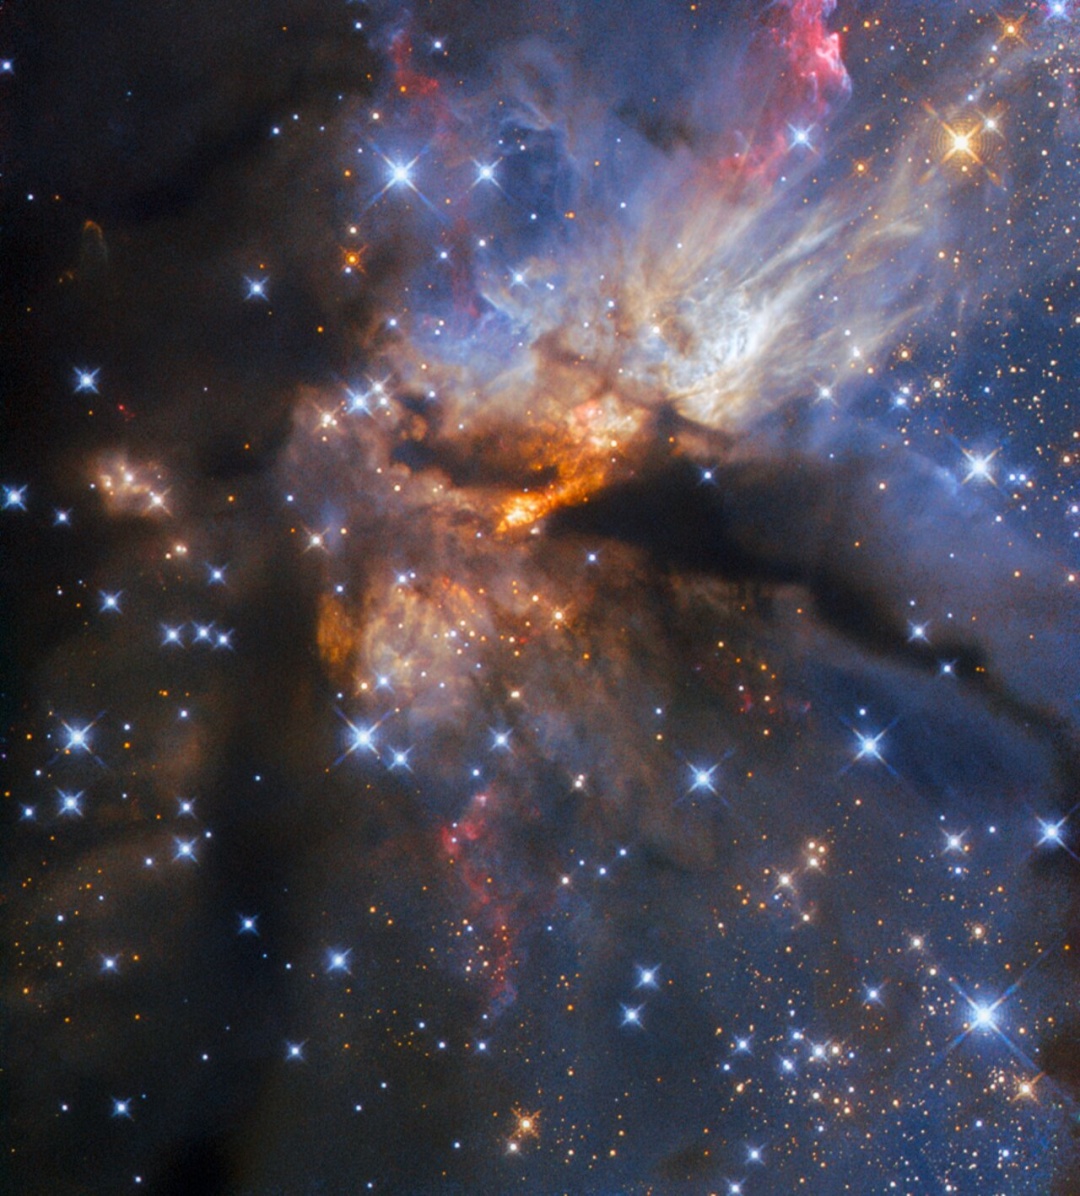 Фото: ESA/Hubble & NASA, R. Fedriani, J. Tan